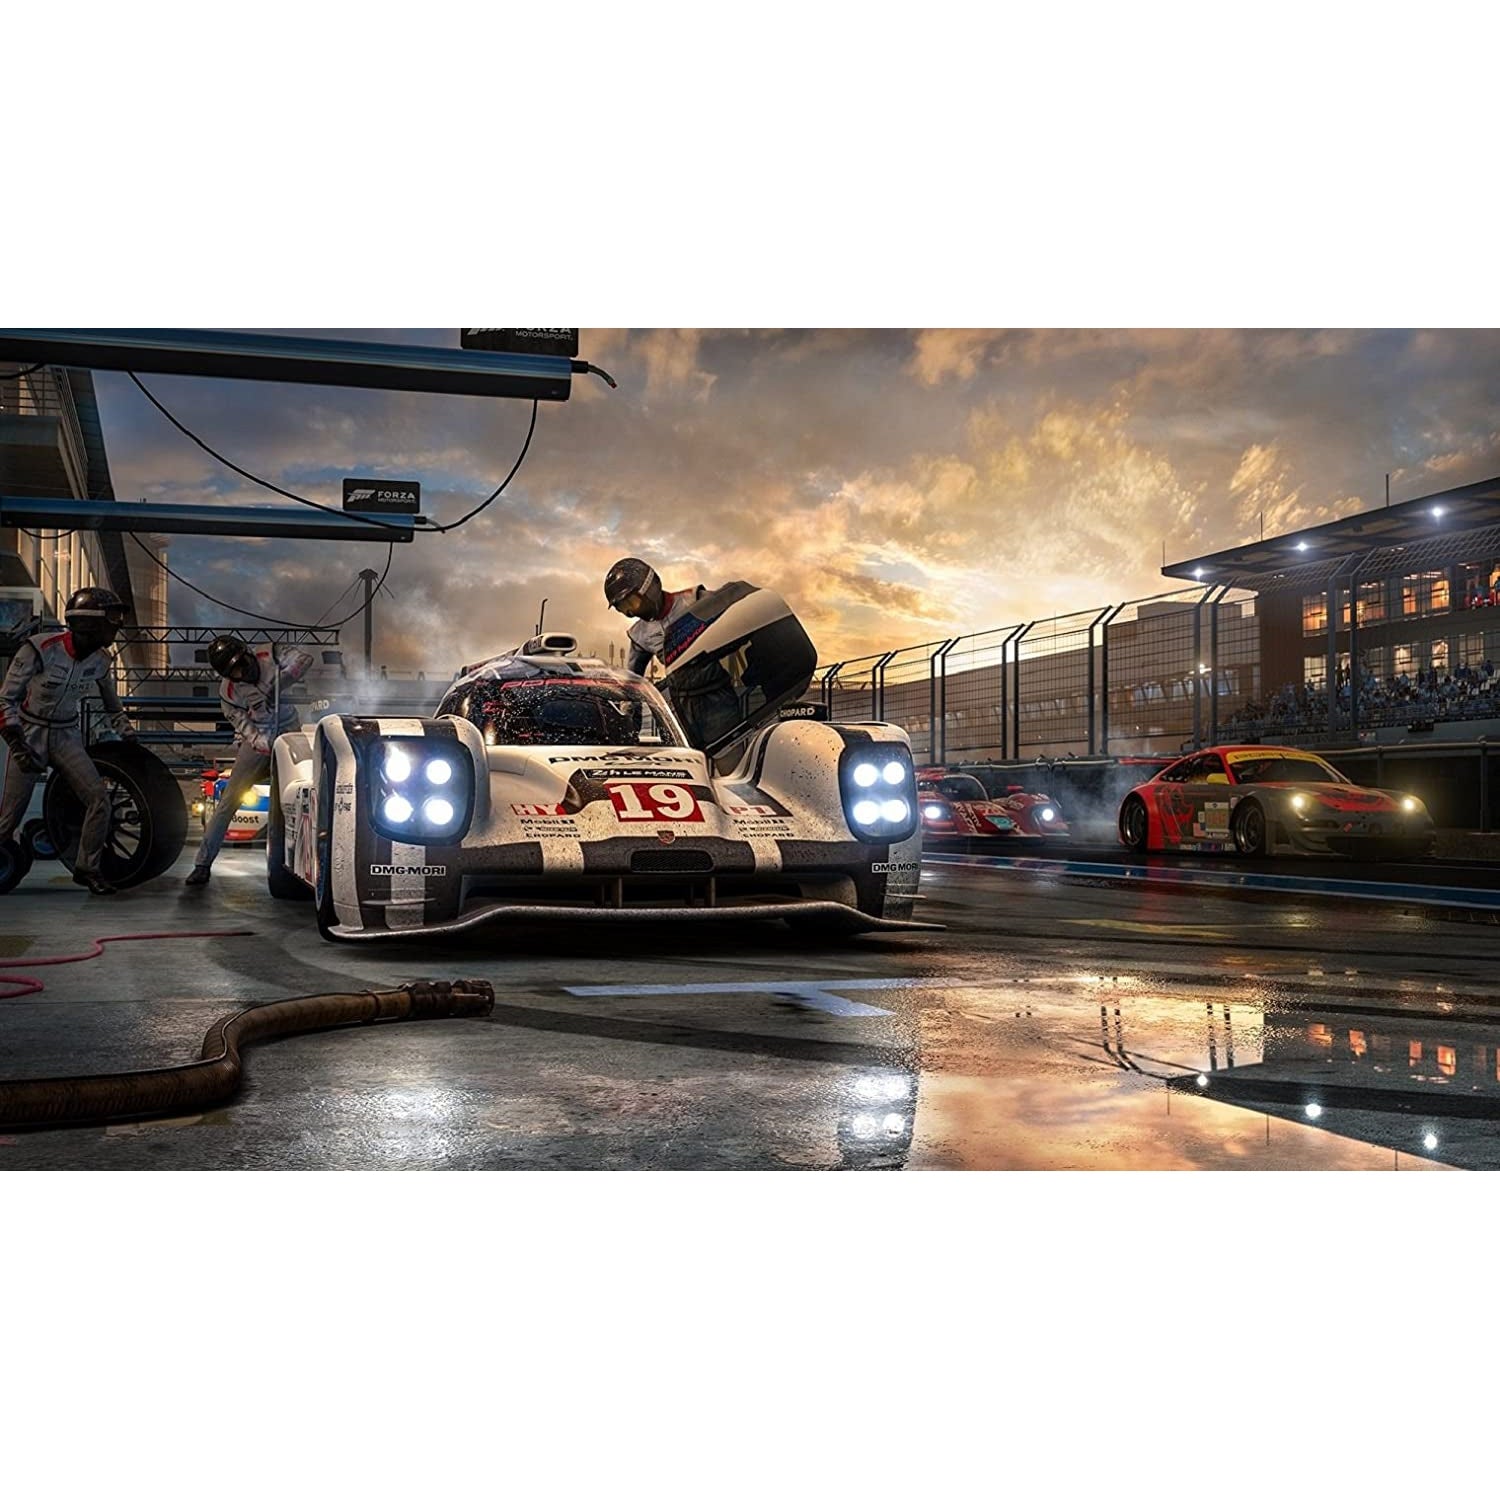 Forza Motorsport 7 Standard Edition (Xbox One)